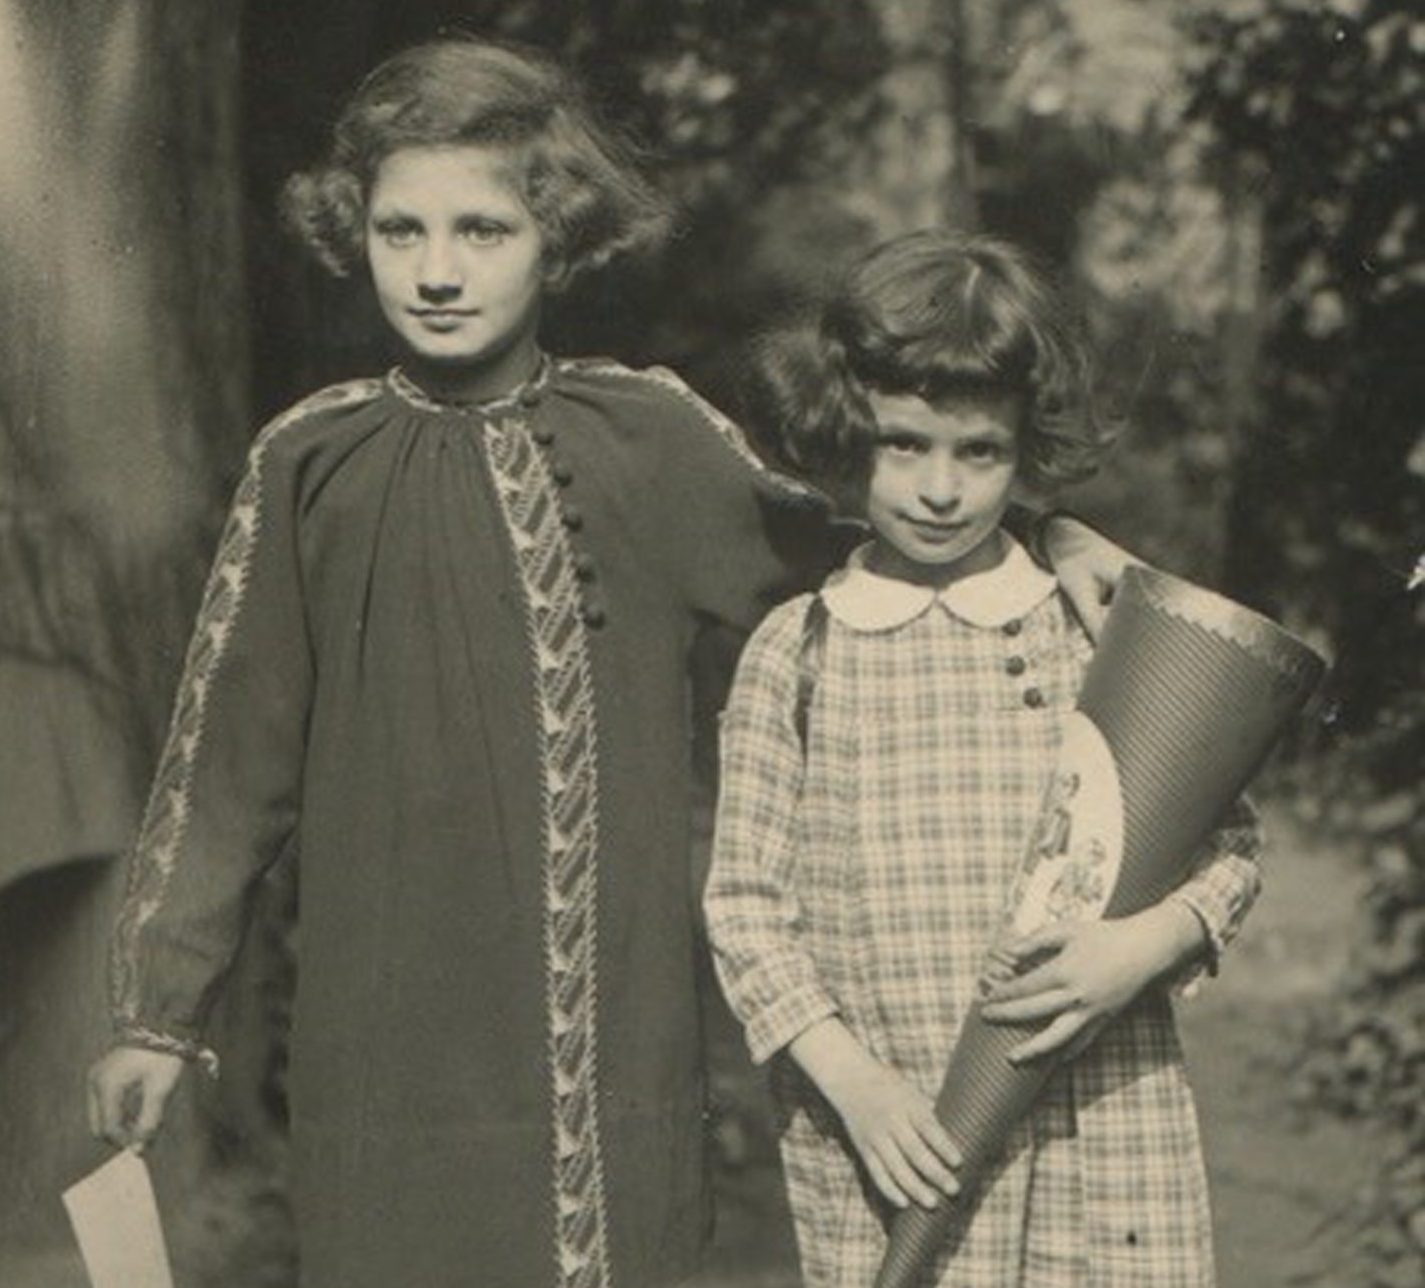 Karola, left, and Lotte in pre-war Germany.